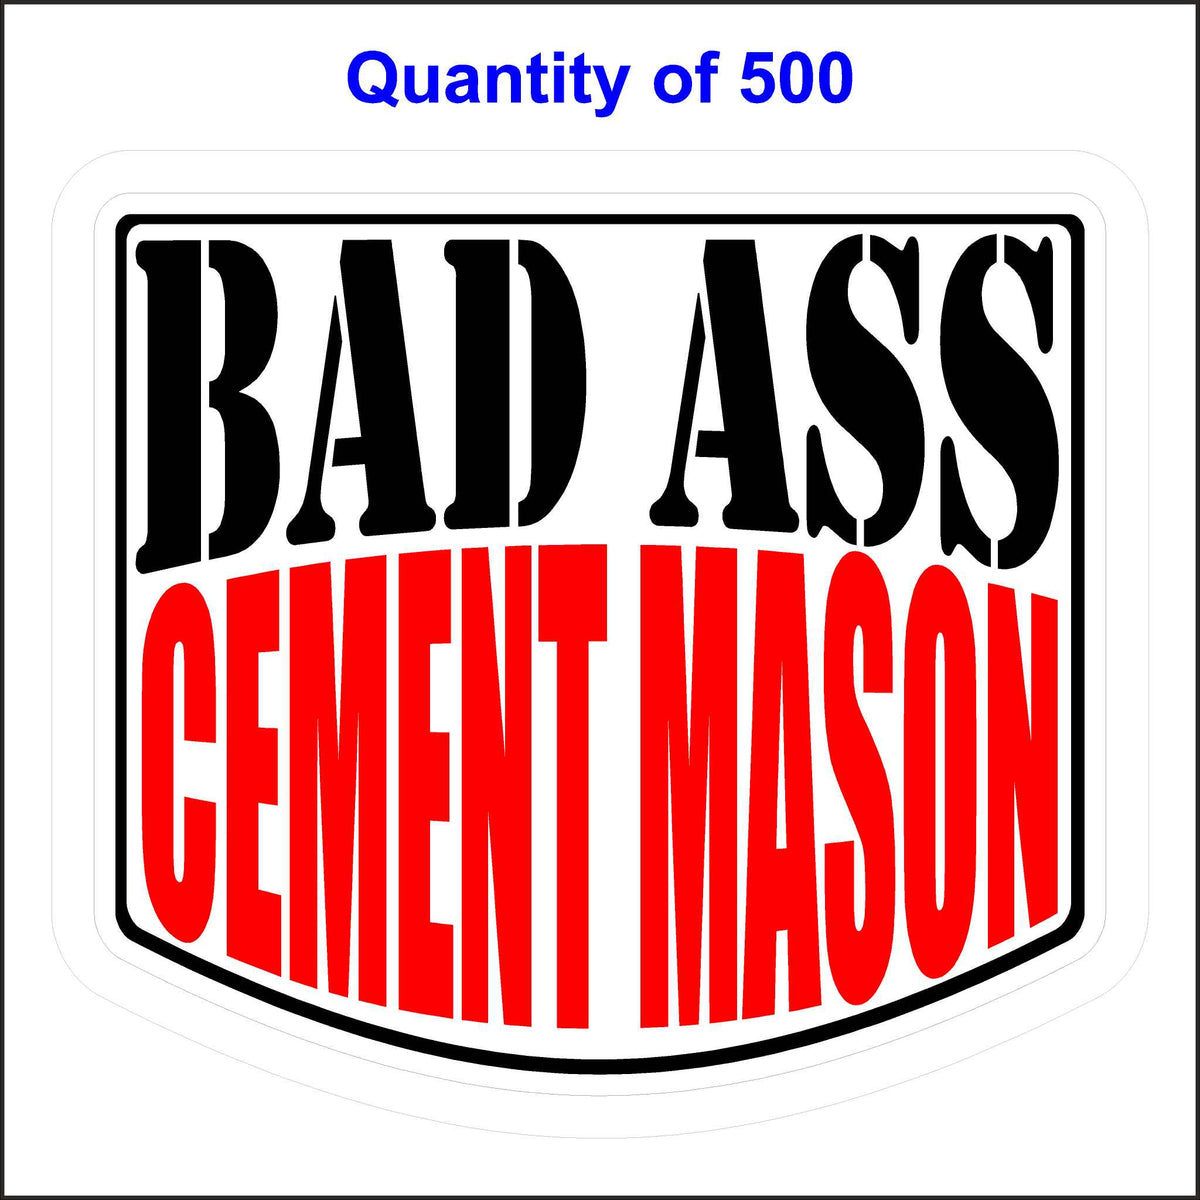 Bad Ass Cement Mason Stickers 500 Quantity.